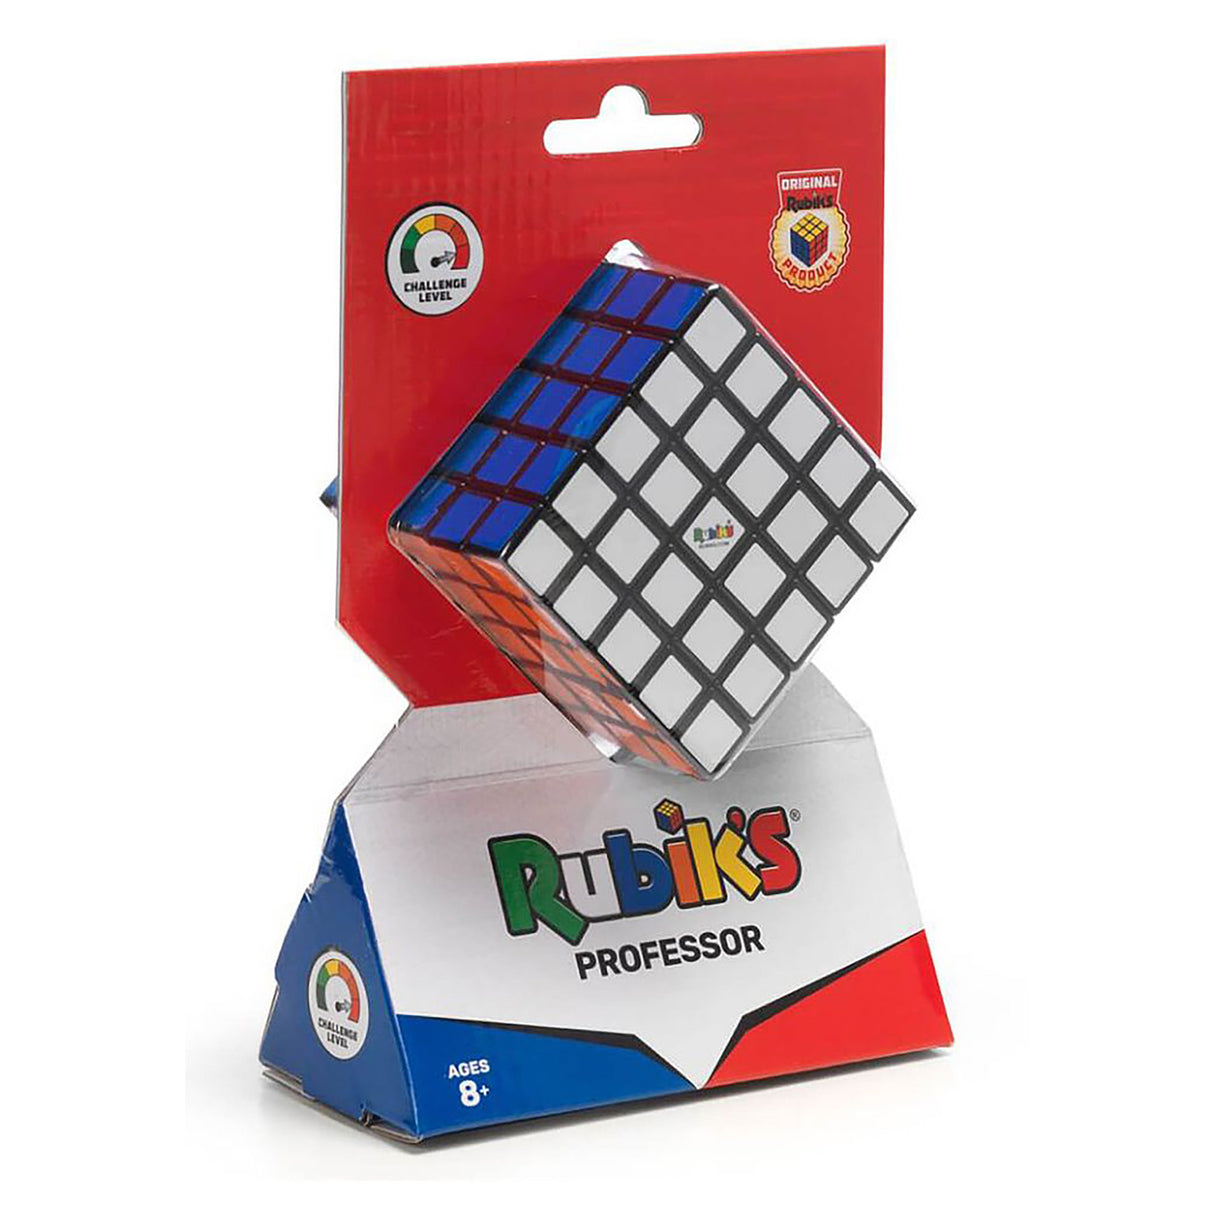 Rubik's 5X5 Professor Cube Fidget Toy